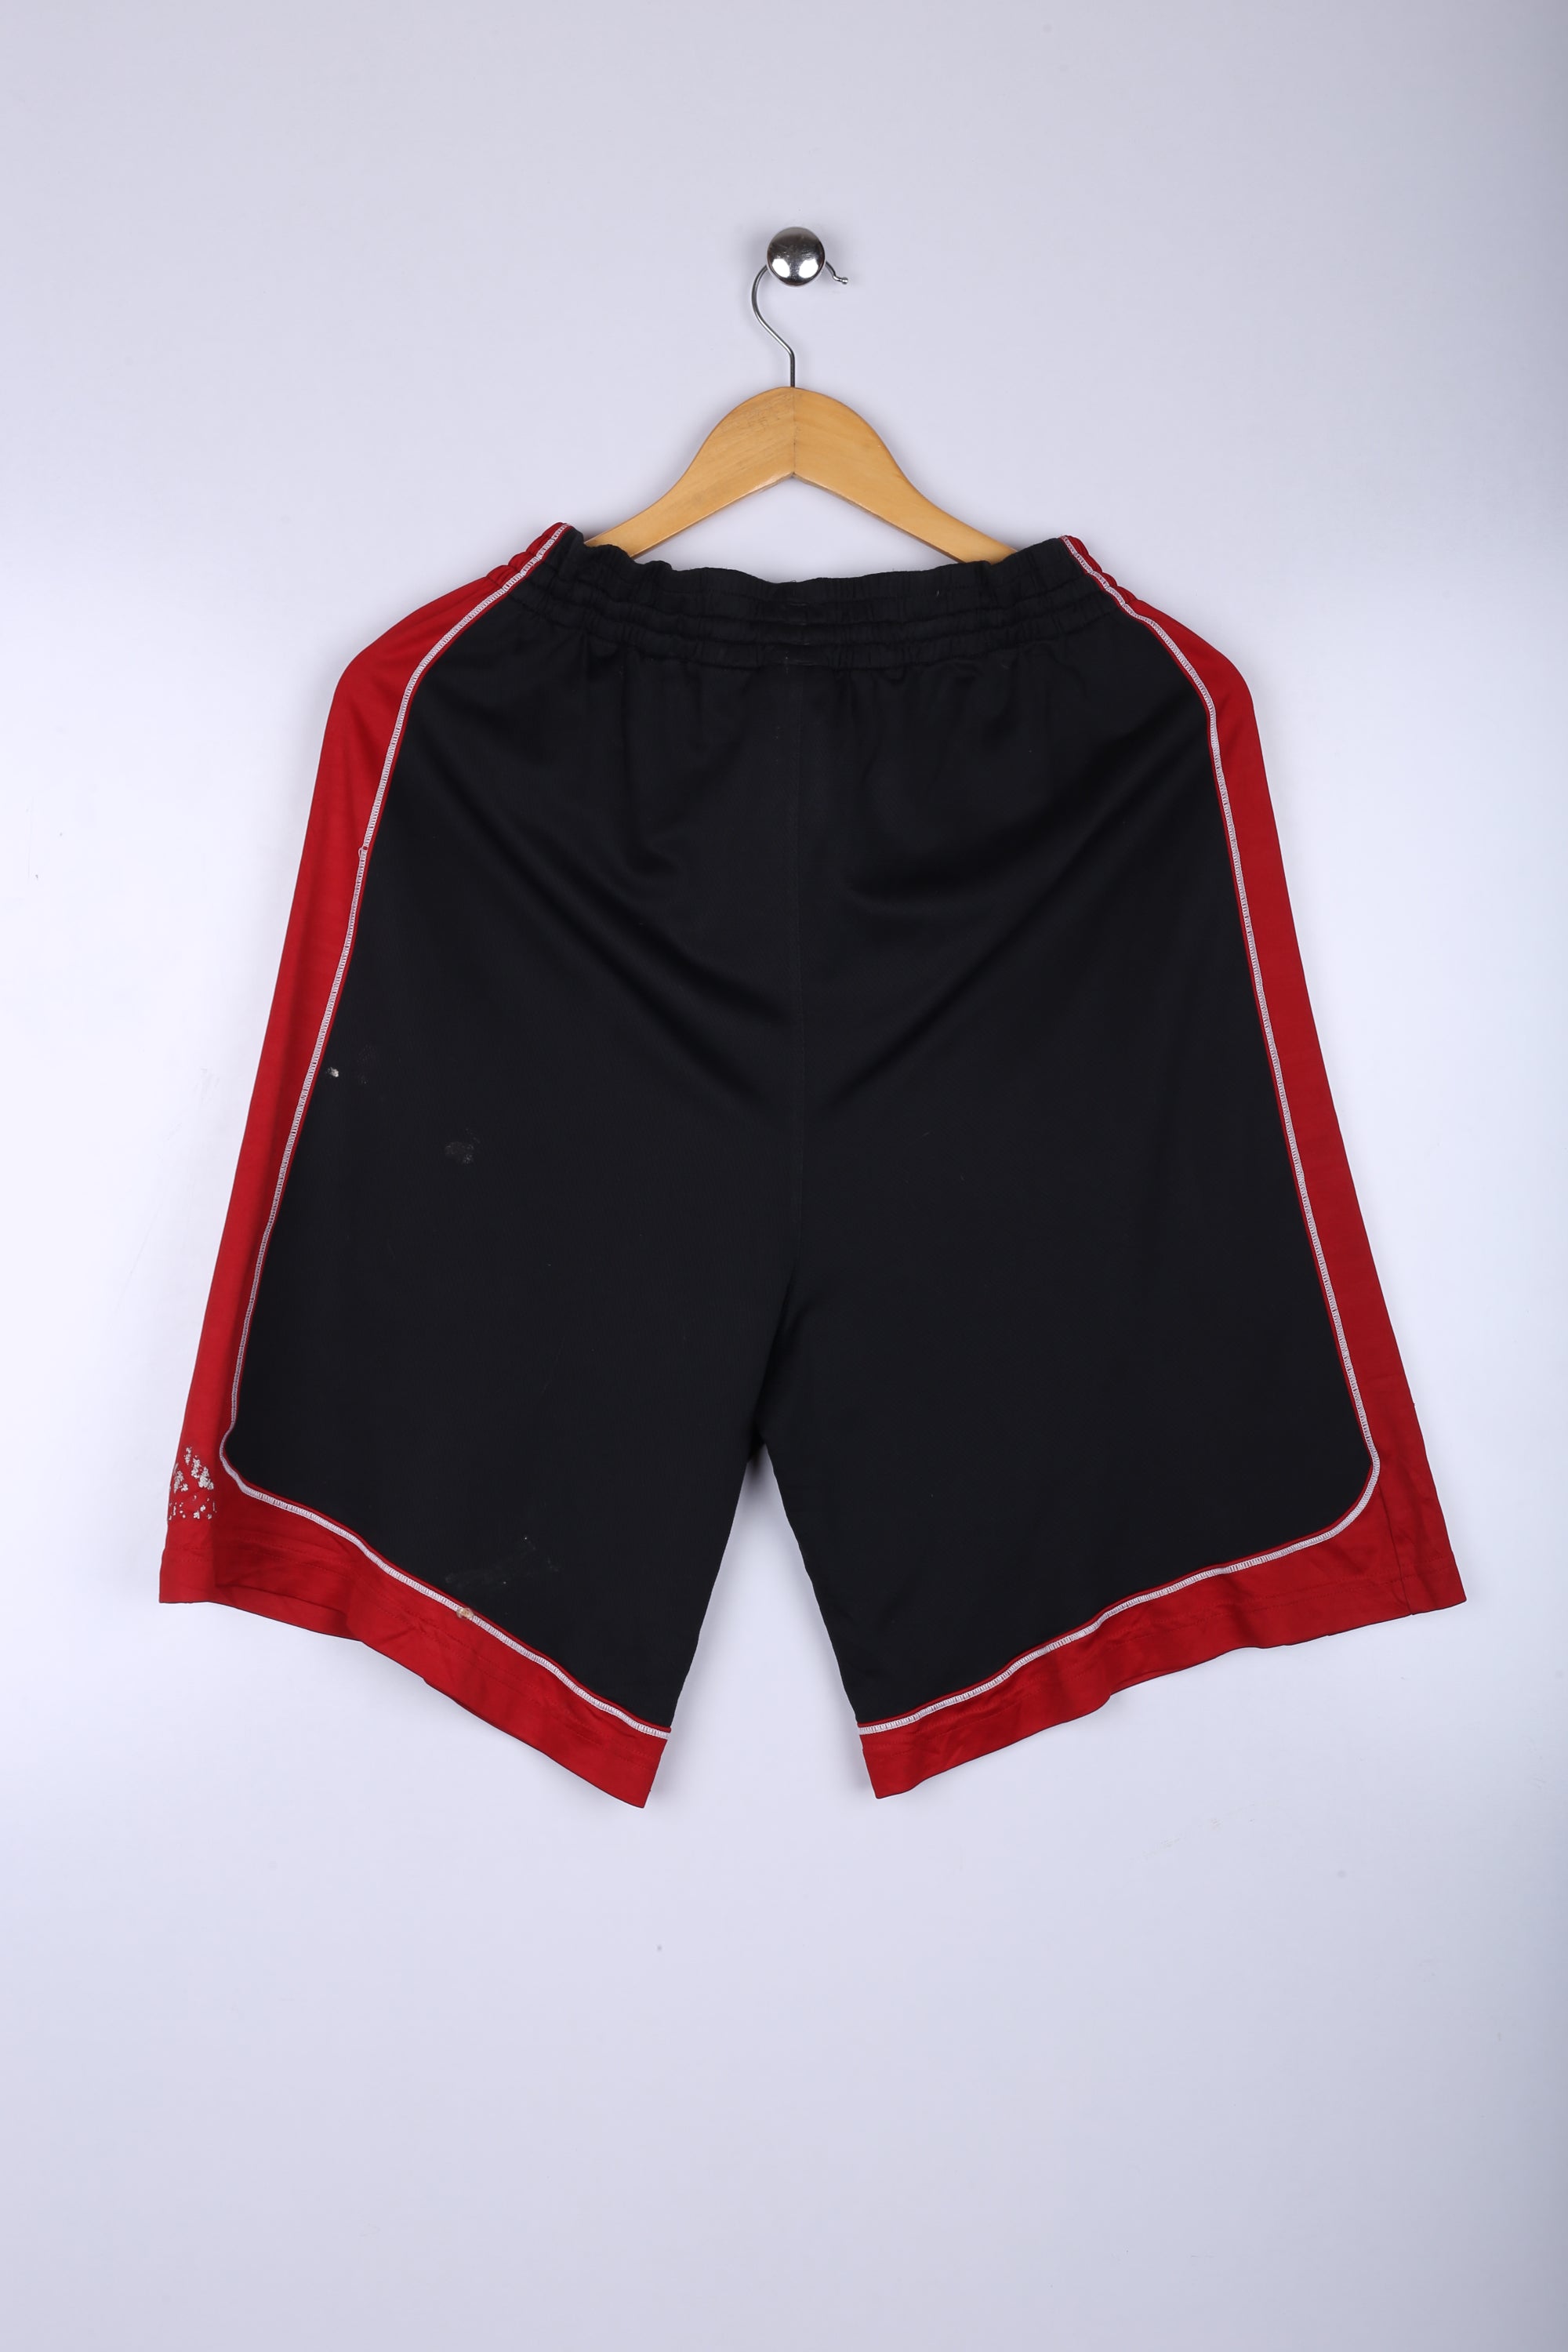 Vintage Adidas Shorts Black/Red